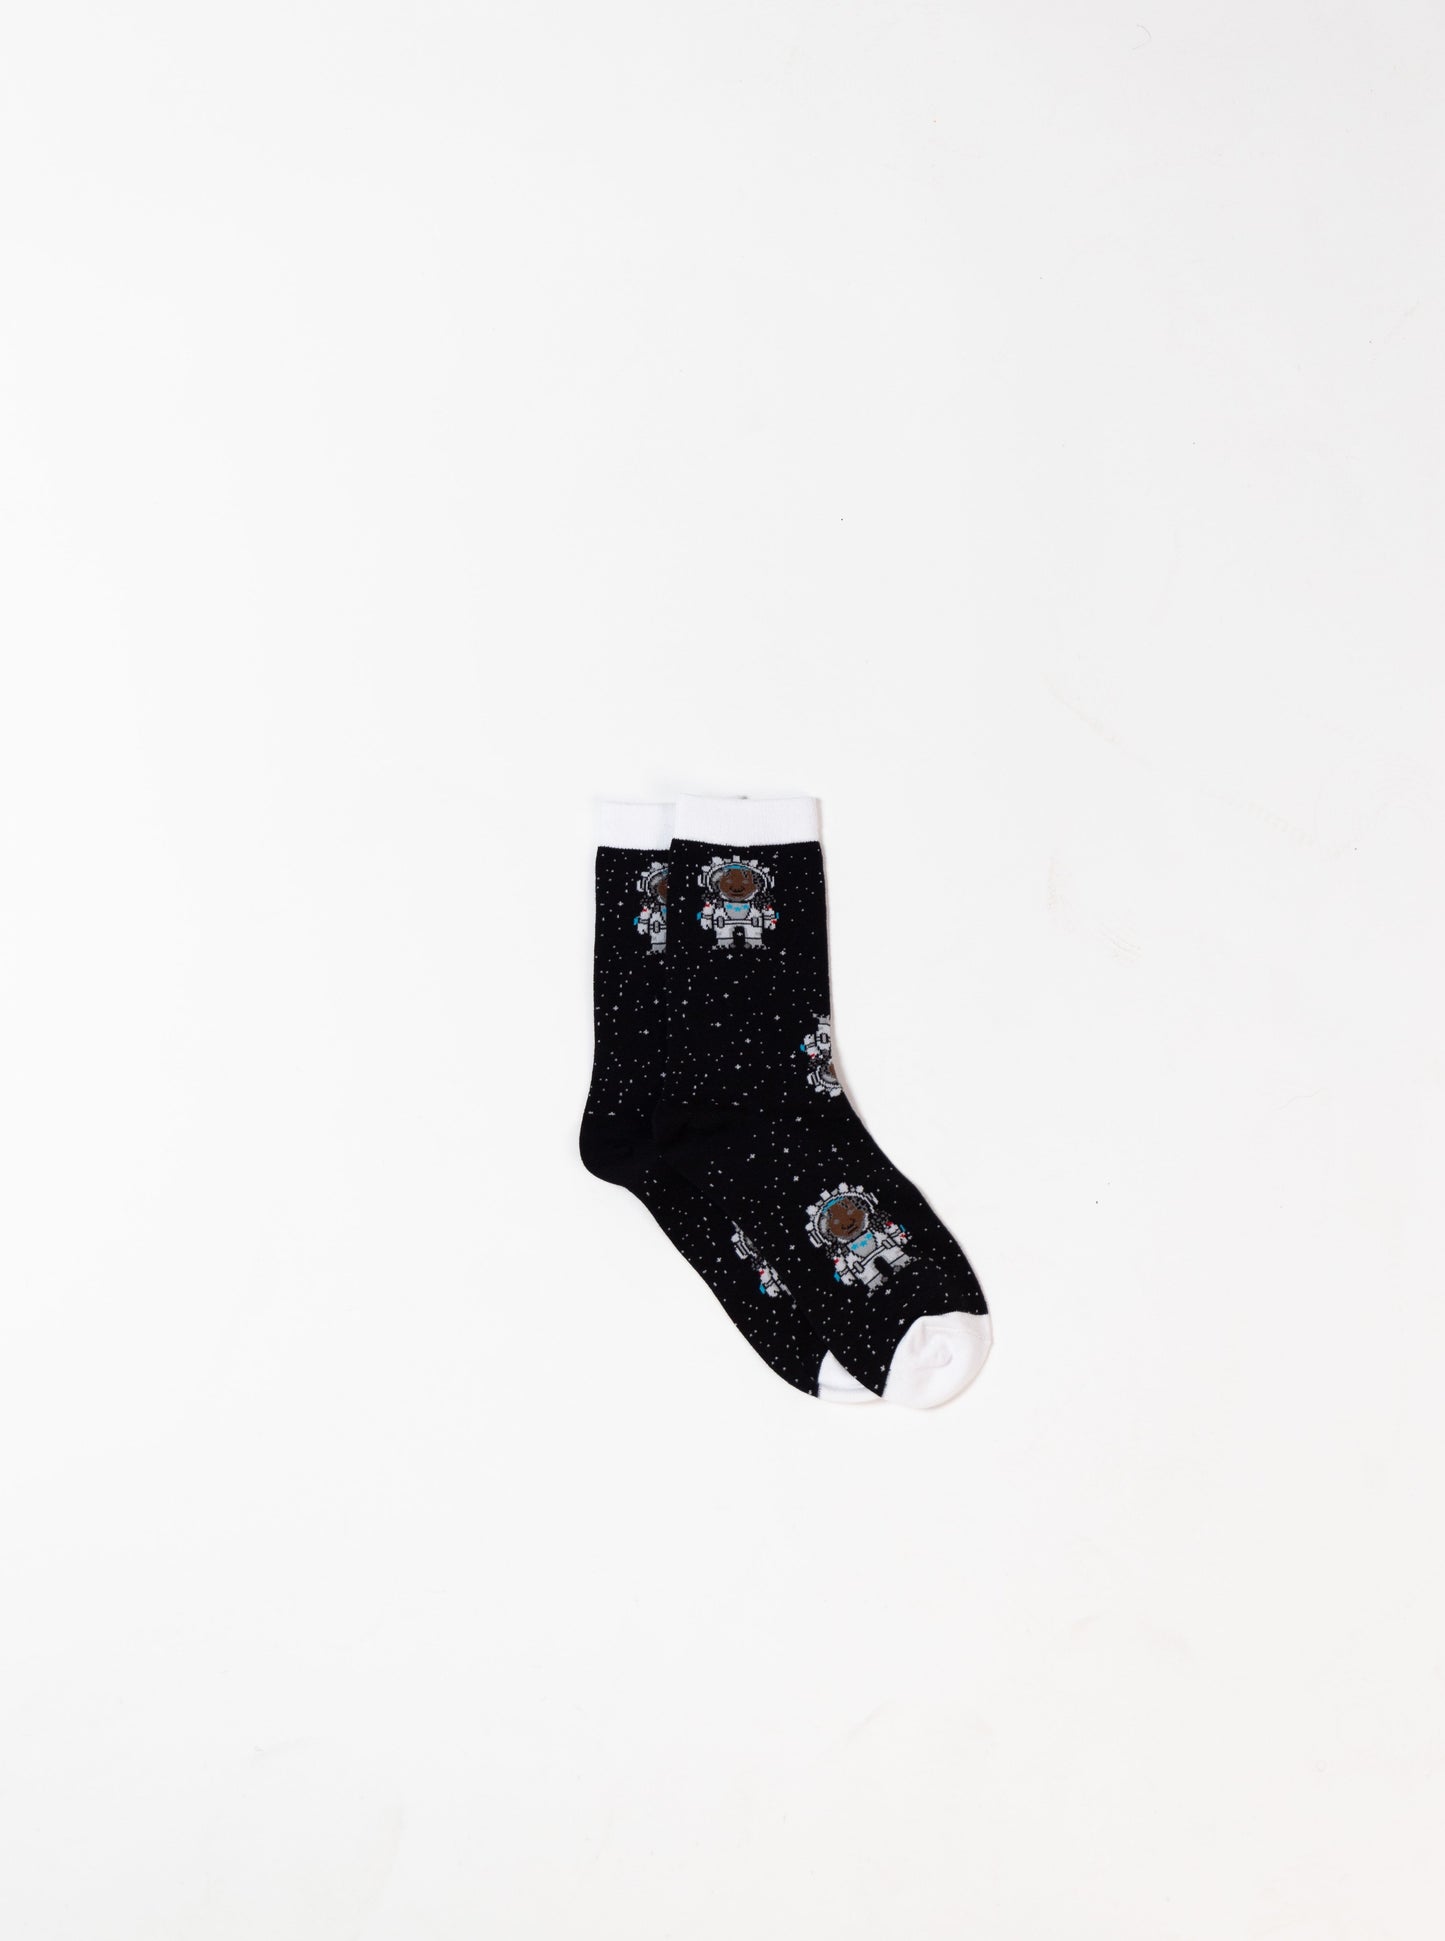 Rastronaut Socks